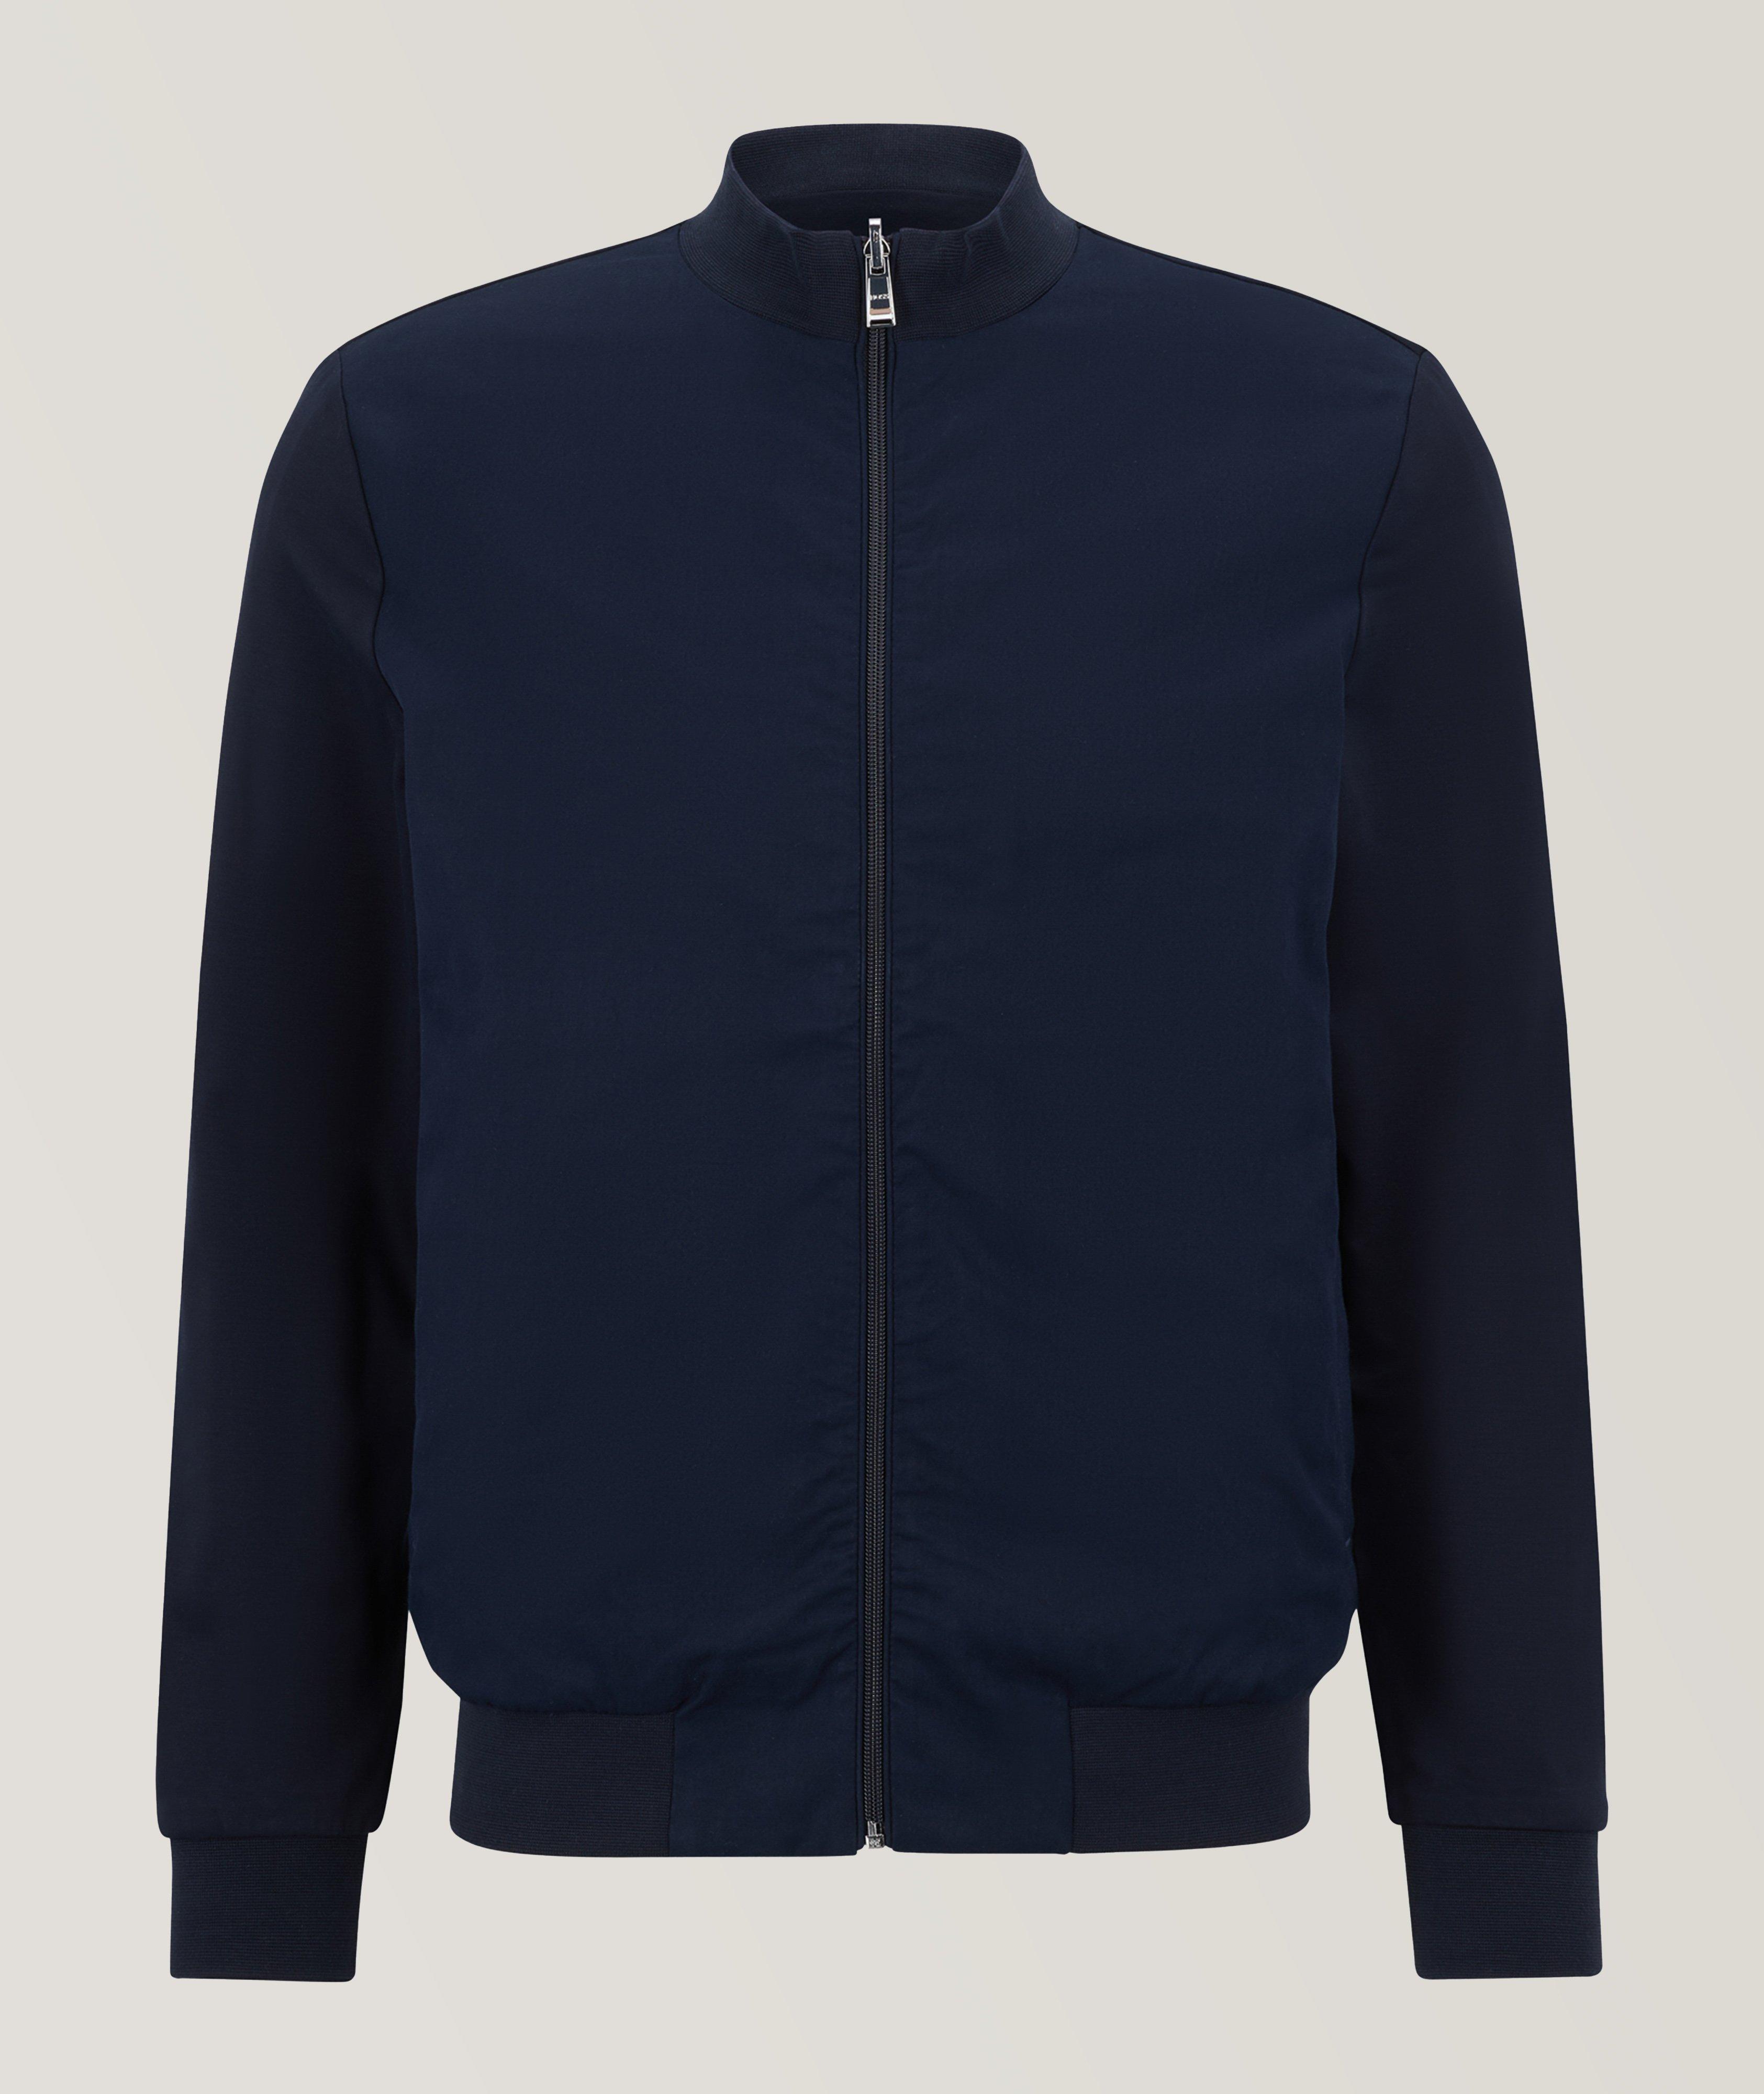 Reversible Cotton-Blend Zip-Up Sweater image 0